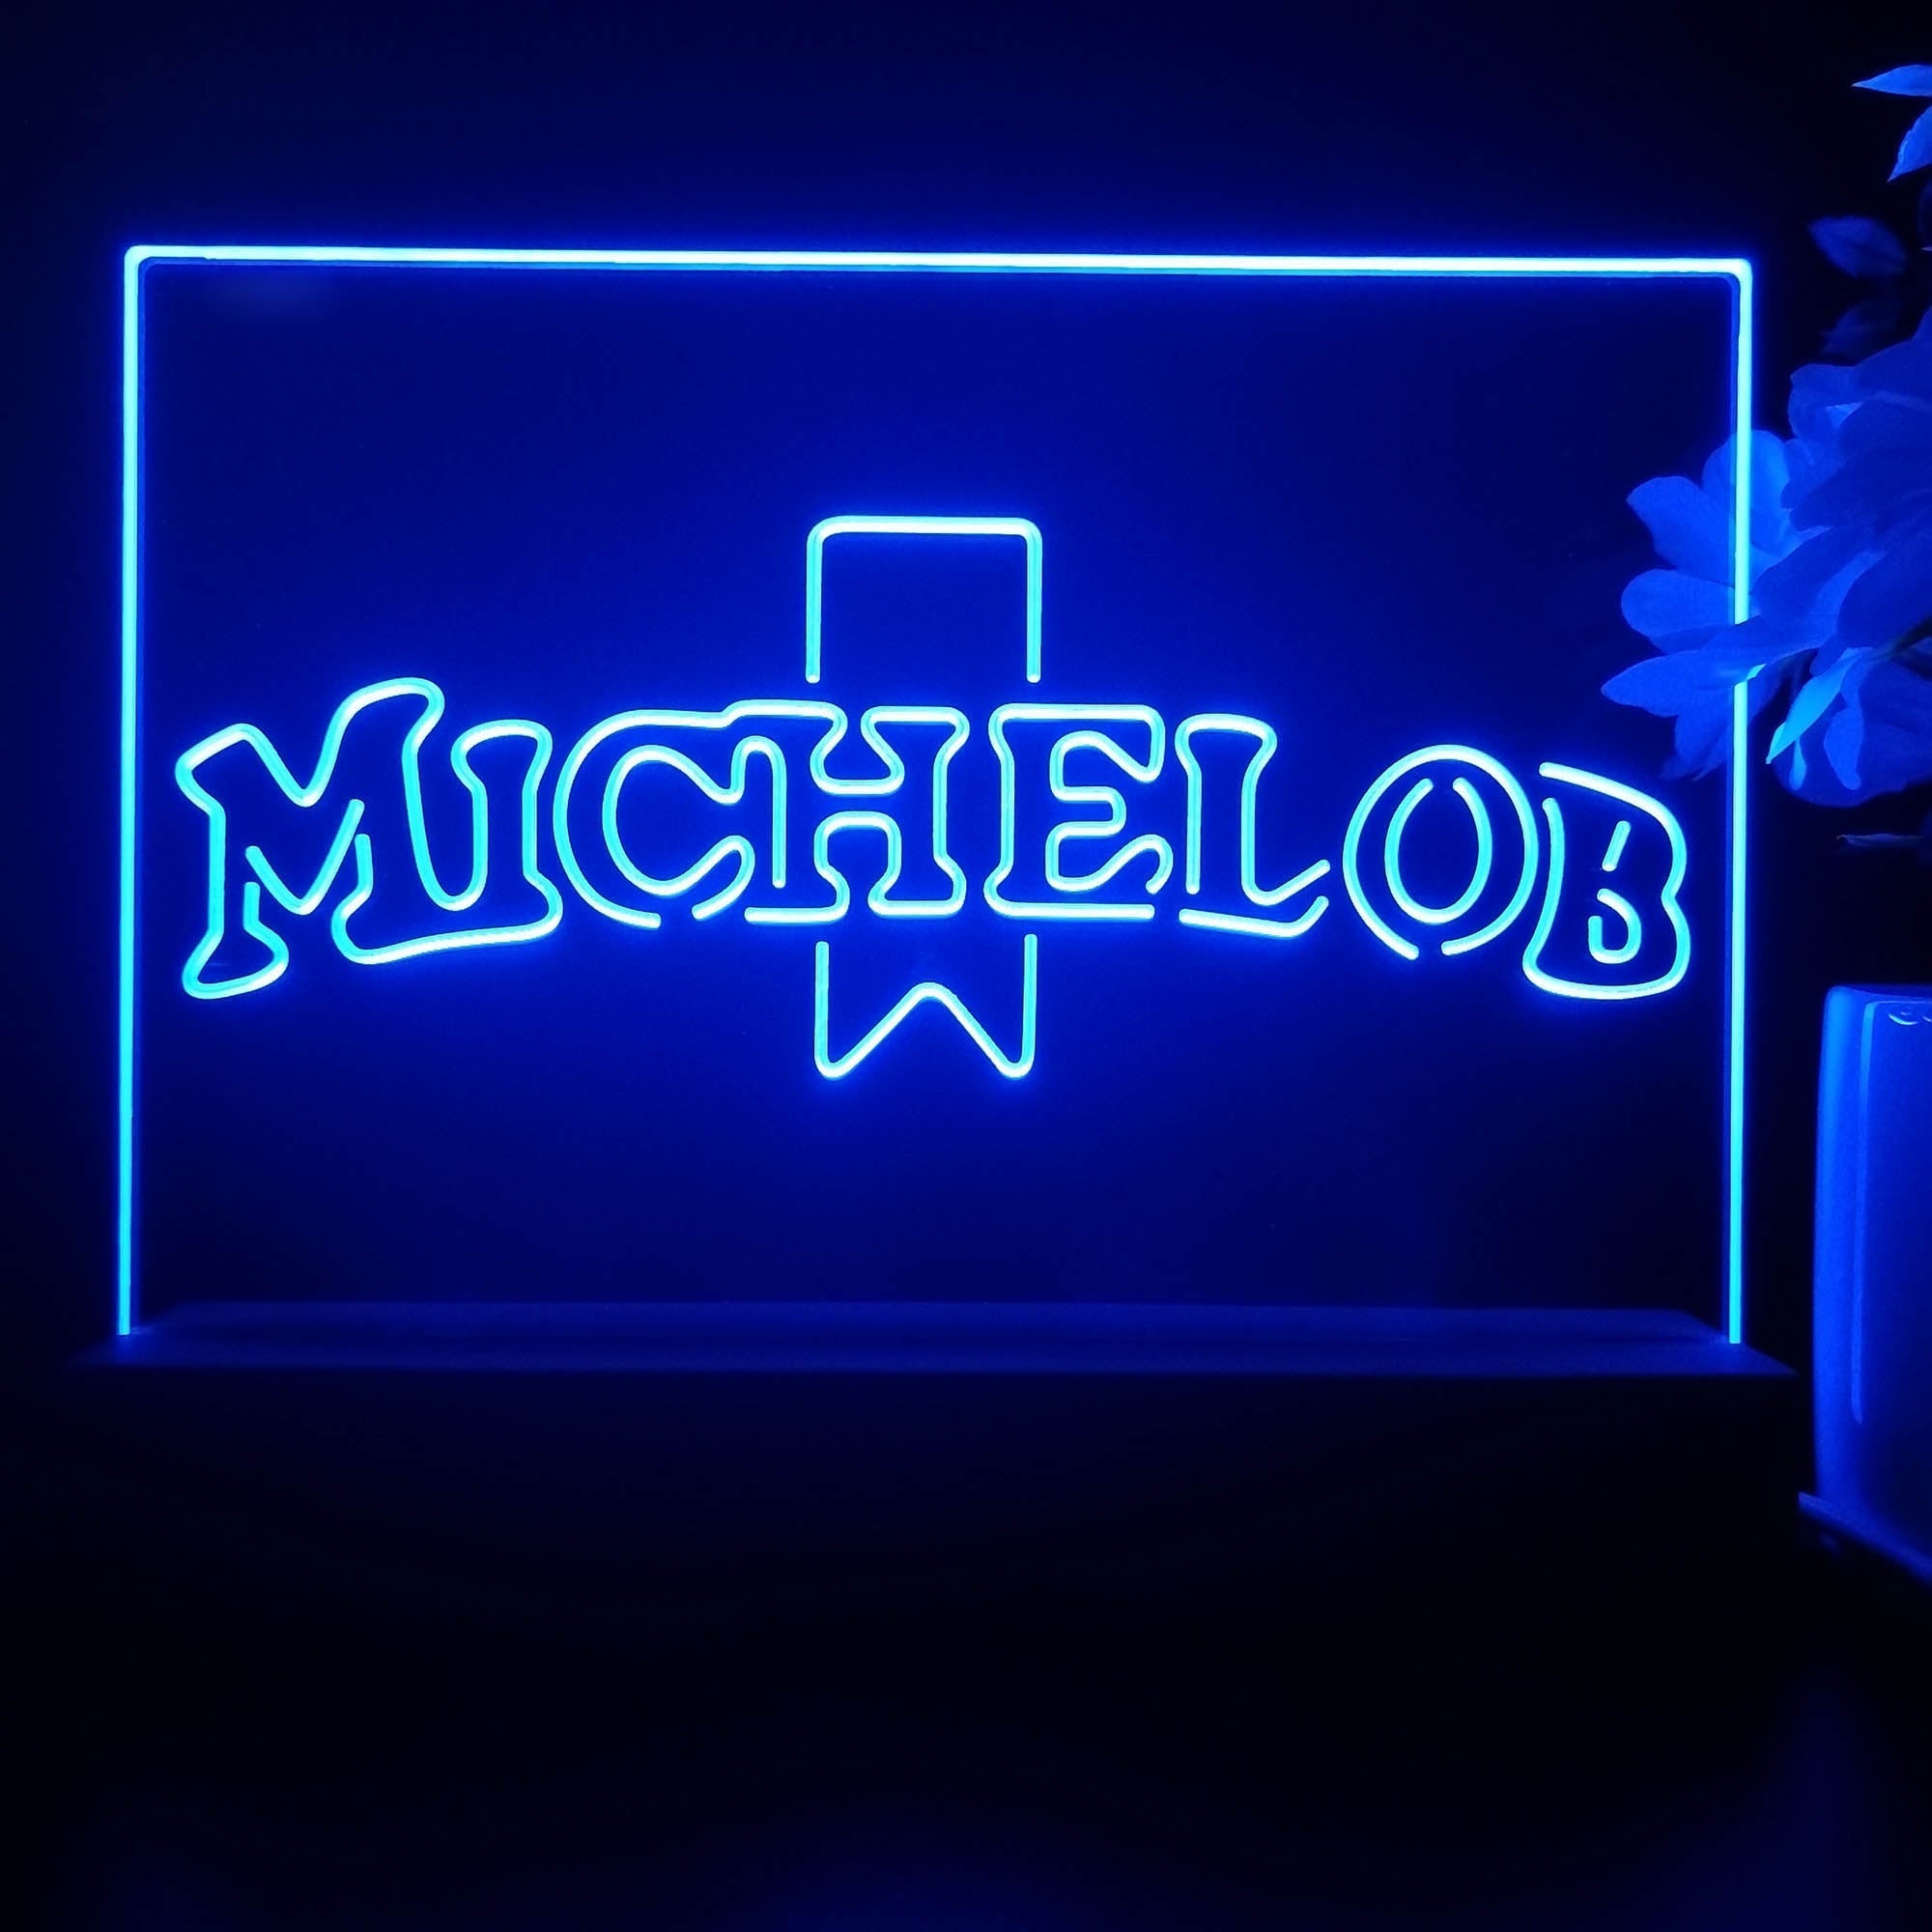 Michelob Logo Neon Sign Pub Bar Lamp